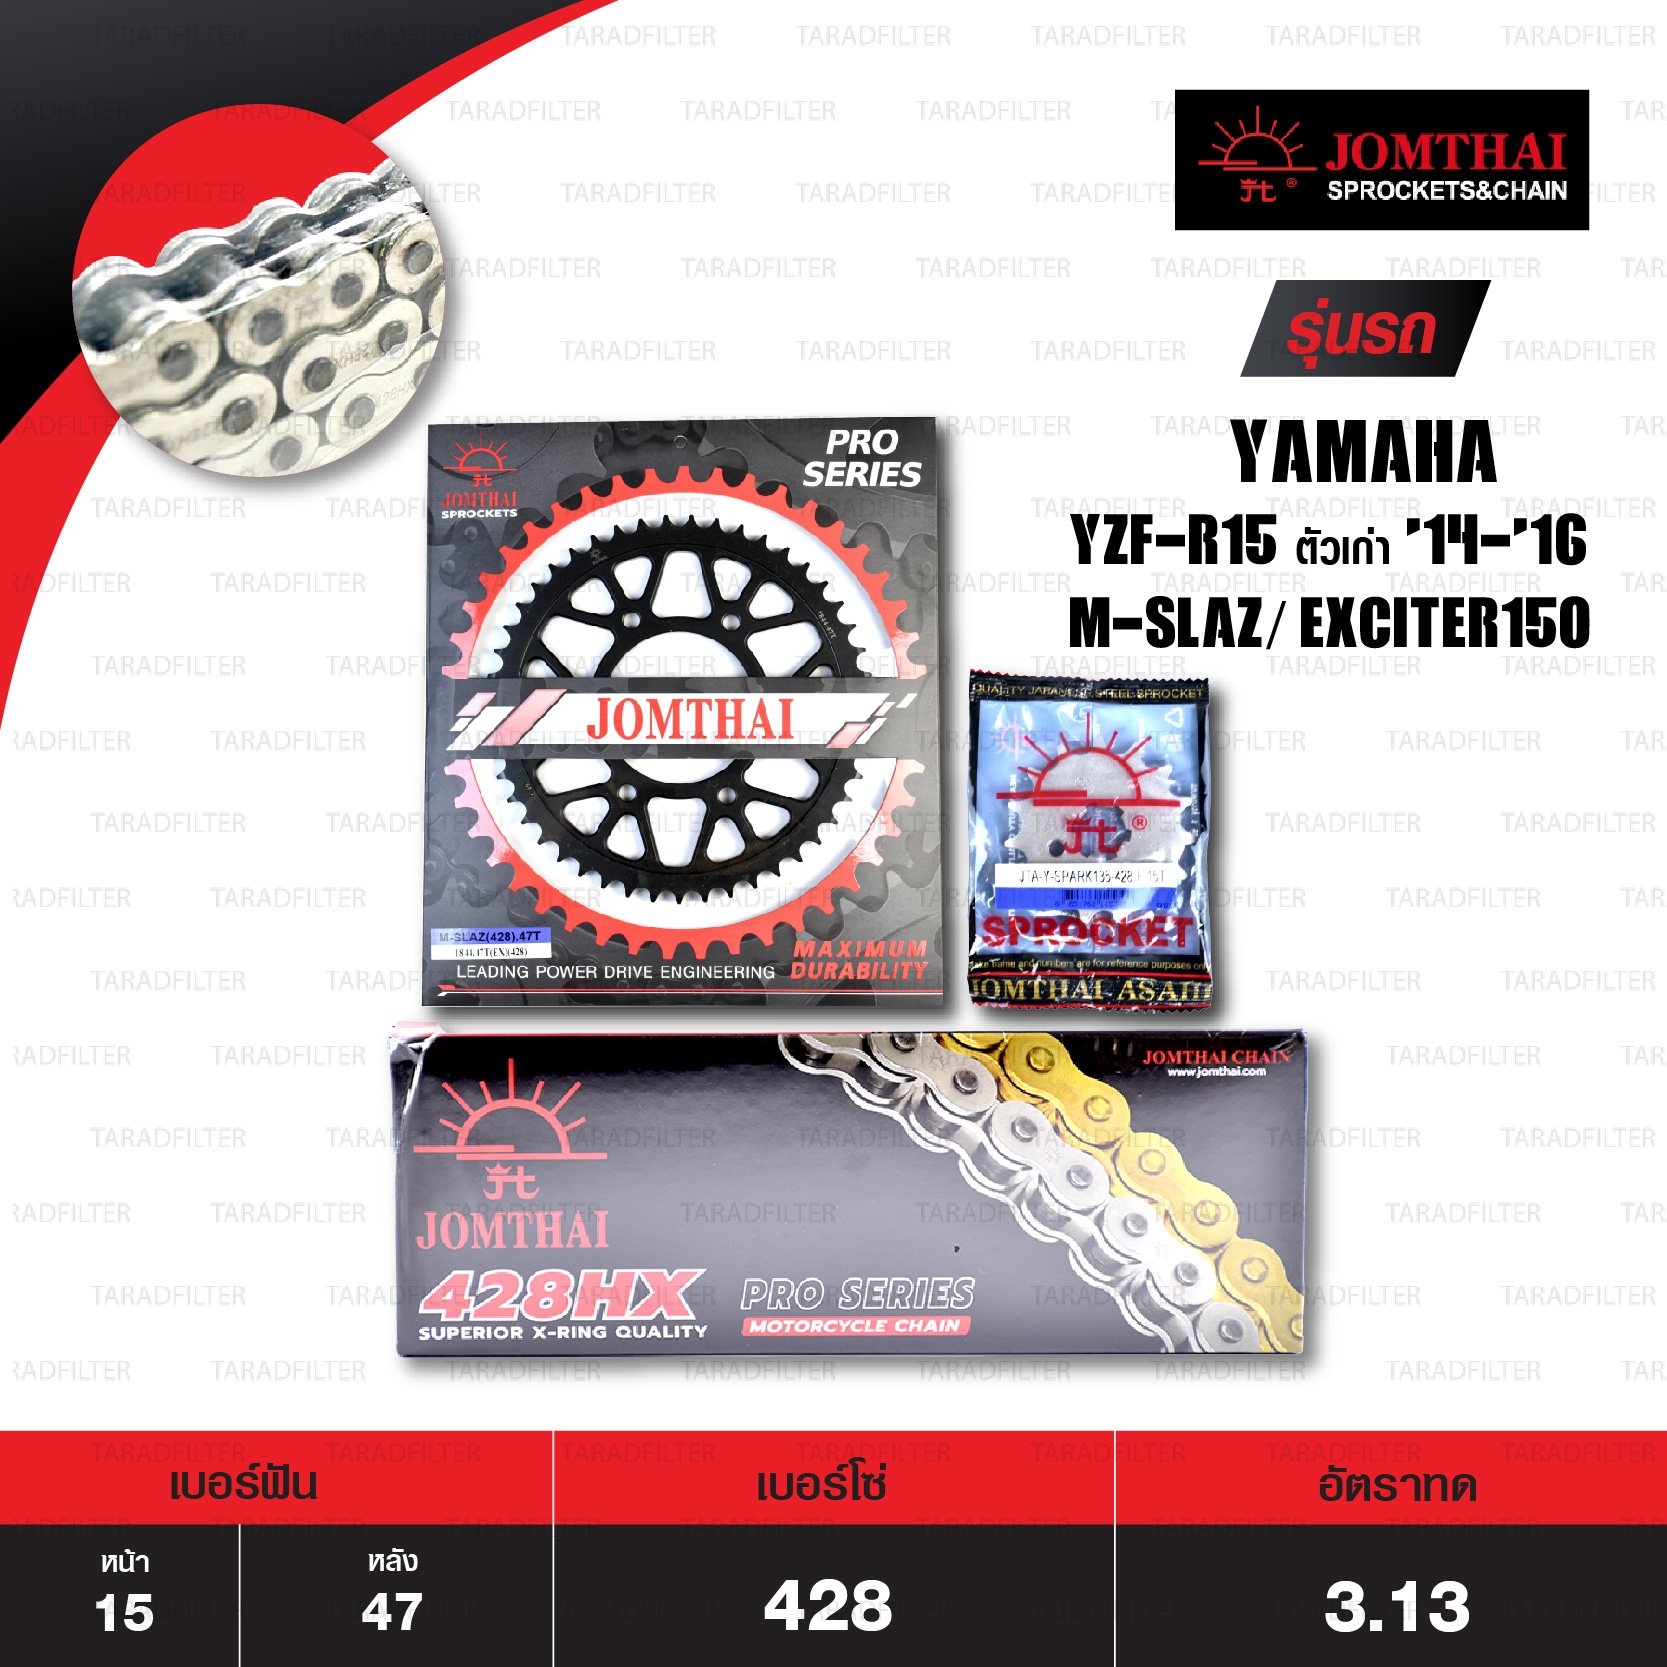 JOMTHAI ชุดเปลี่ยนโซ่-สเตอร์ Pro Series โซ่ X-ring (ASMX) สี NICKEL และ สเตอร์หลังสีดำ ใช้สำหรับ Yamaha รุ่น YZF-R15 ตัวเก่า, M-Slaz และ Exciter150 [15/47]